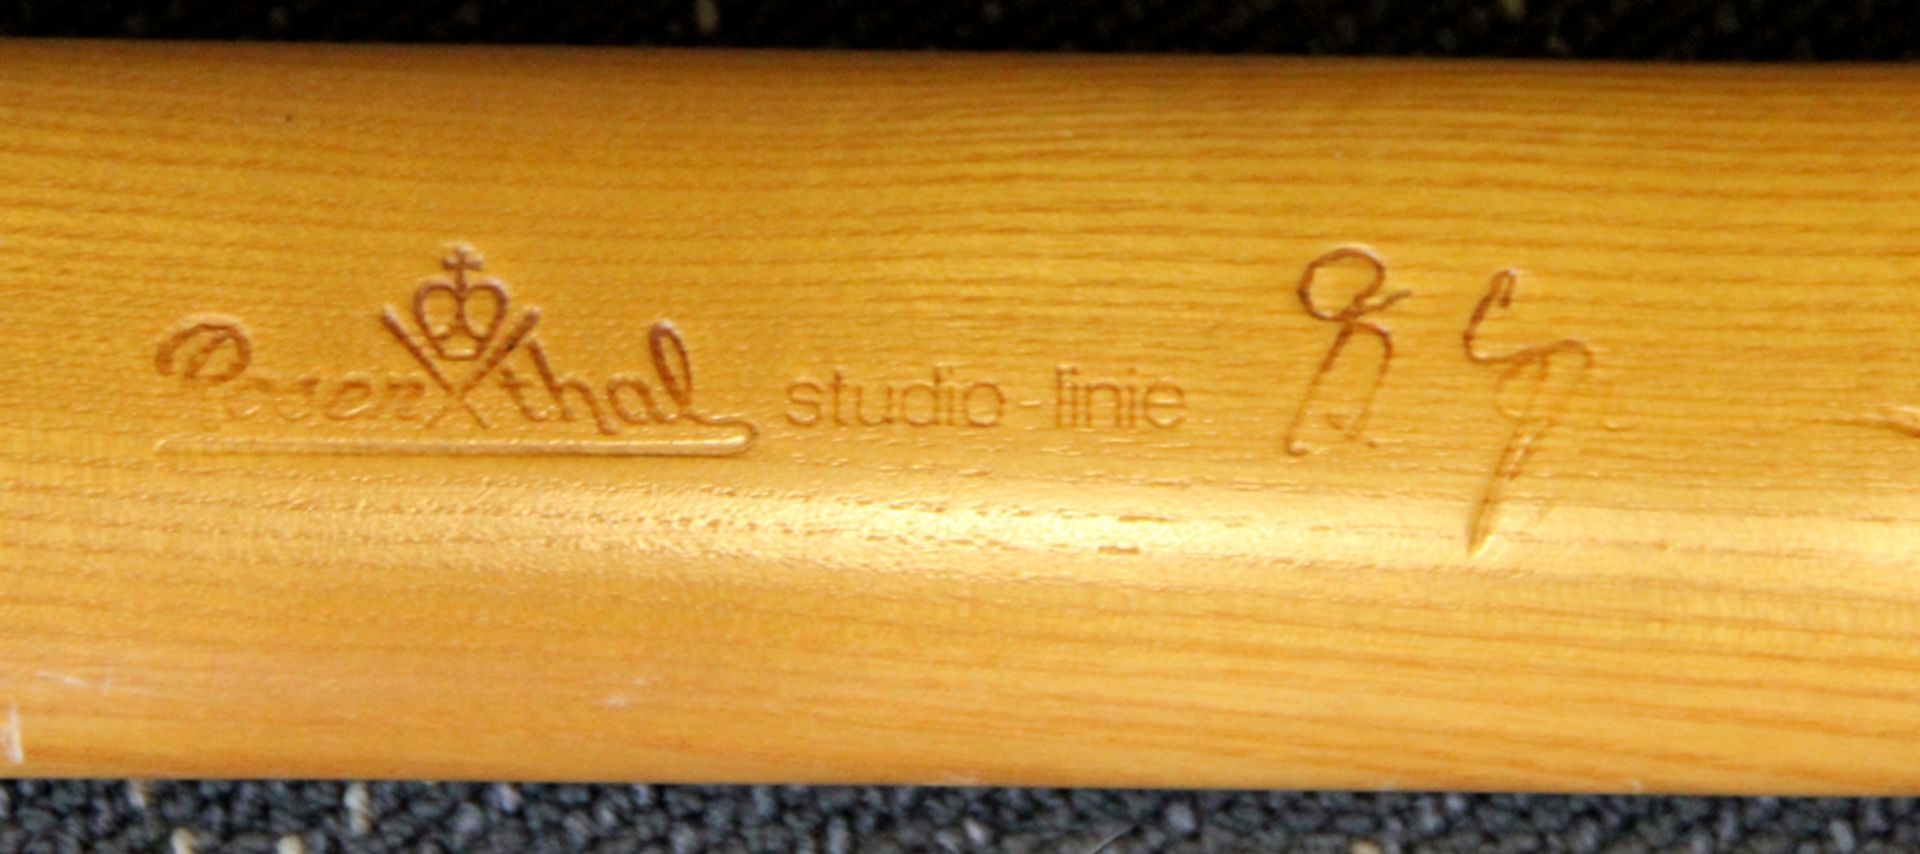 Rosenthal studio linie-Armlehnstuhl - Image 3 of 3